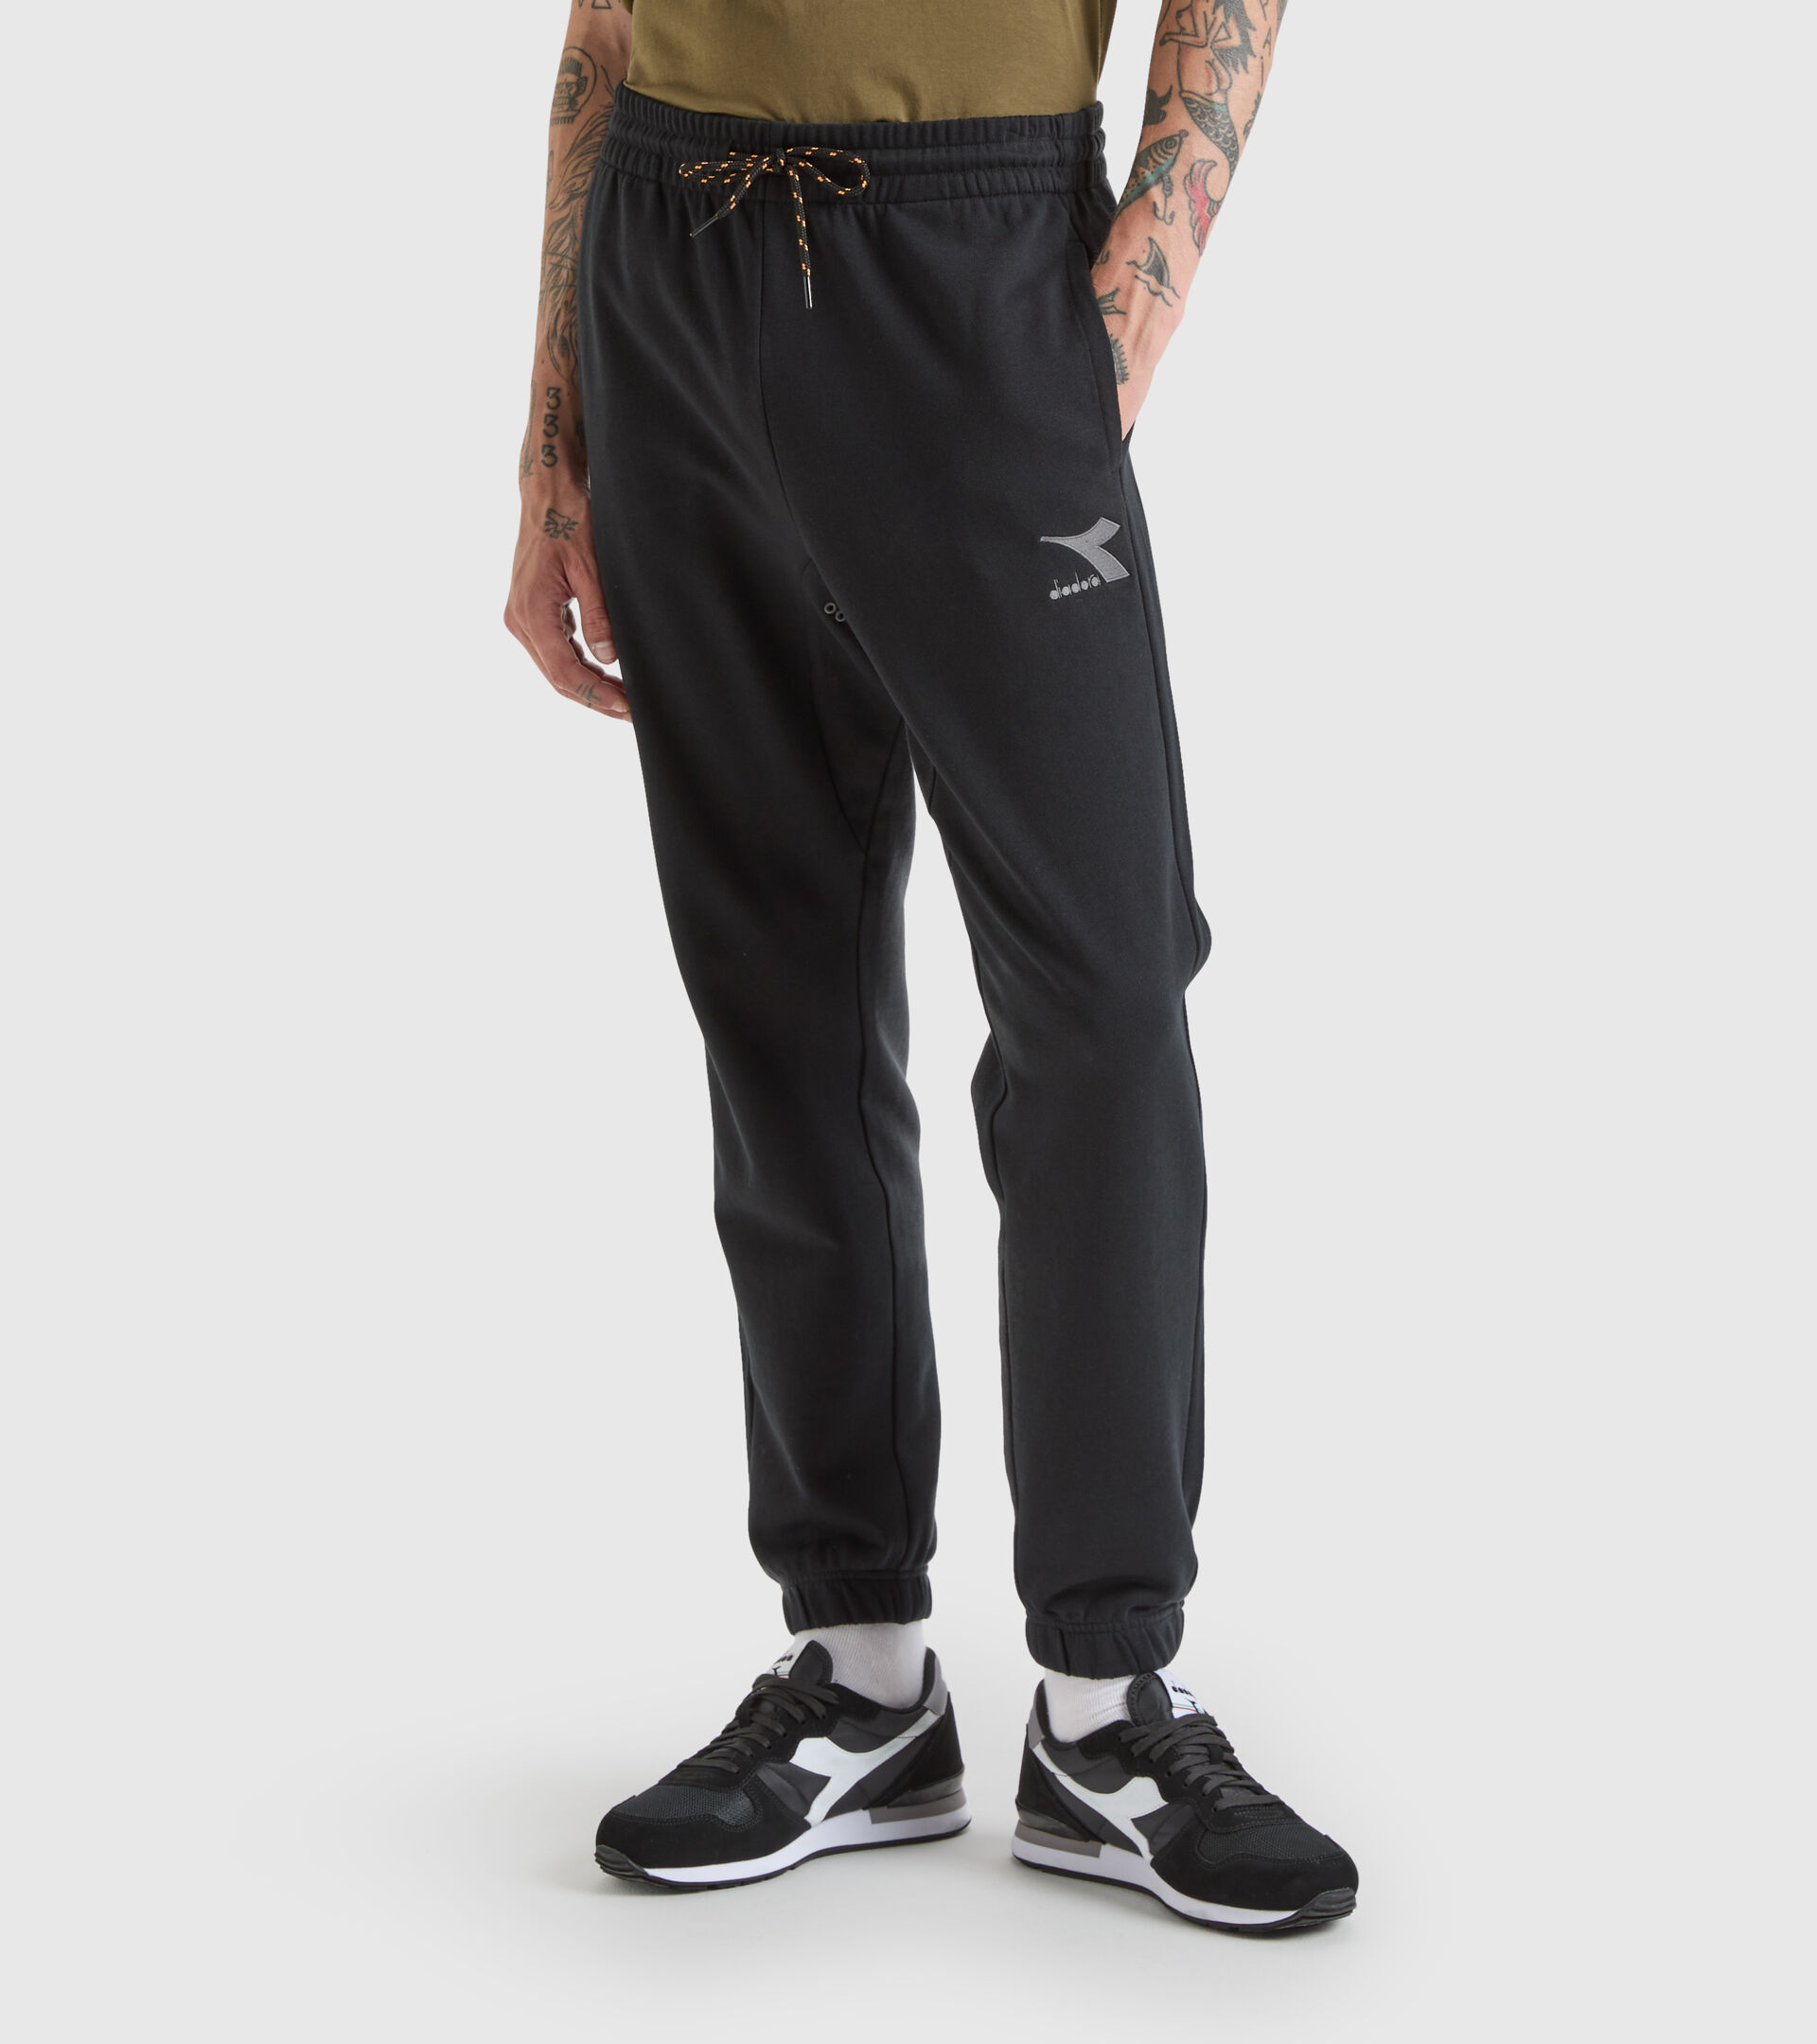 Cotton sports trousers - Men’s PANTS CUFF DRIFT BLACK - Diadora